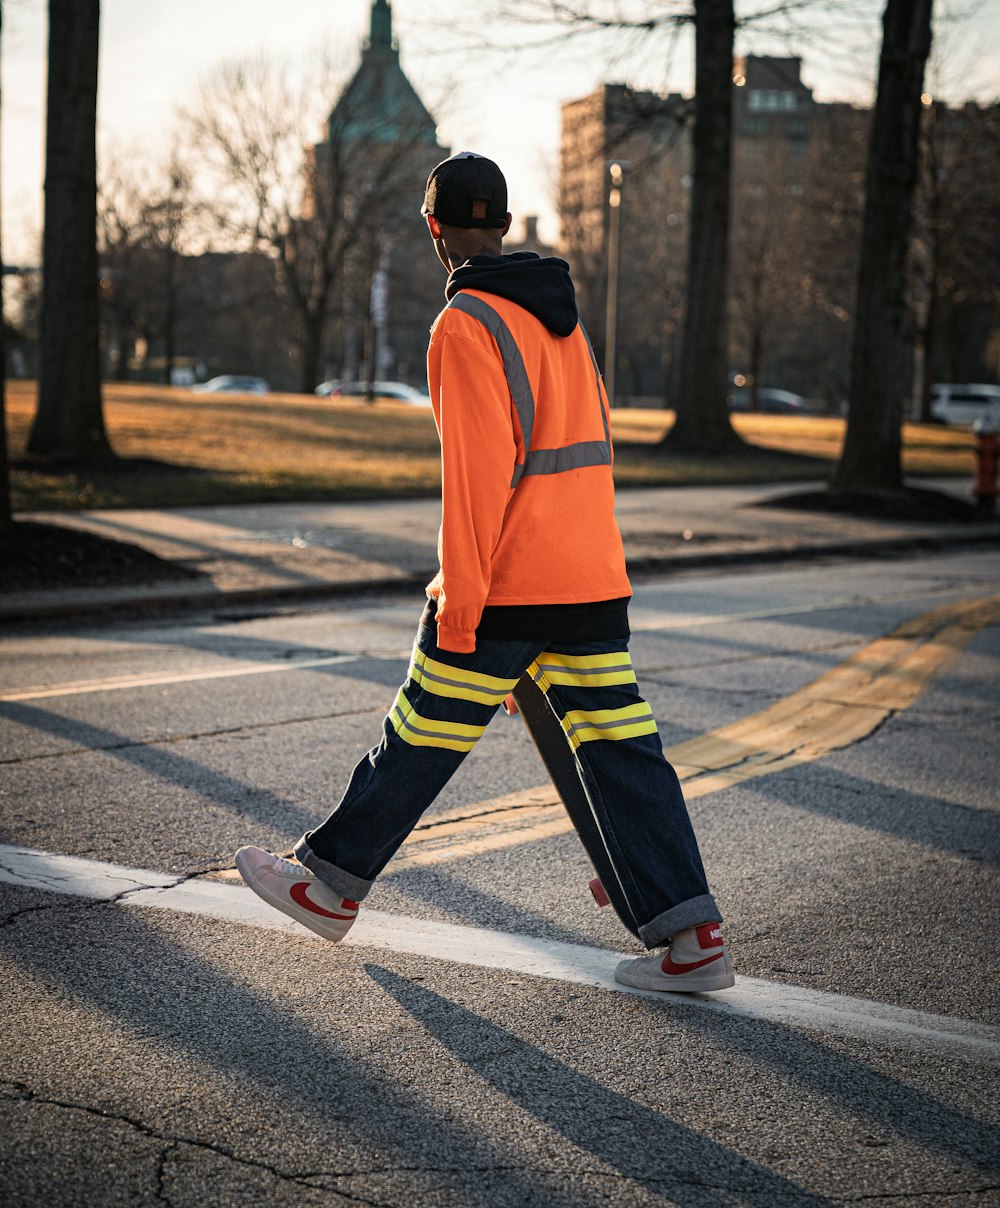 a man in an orange safety vest crossing a street